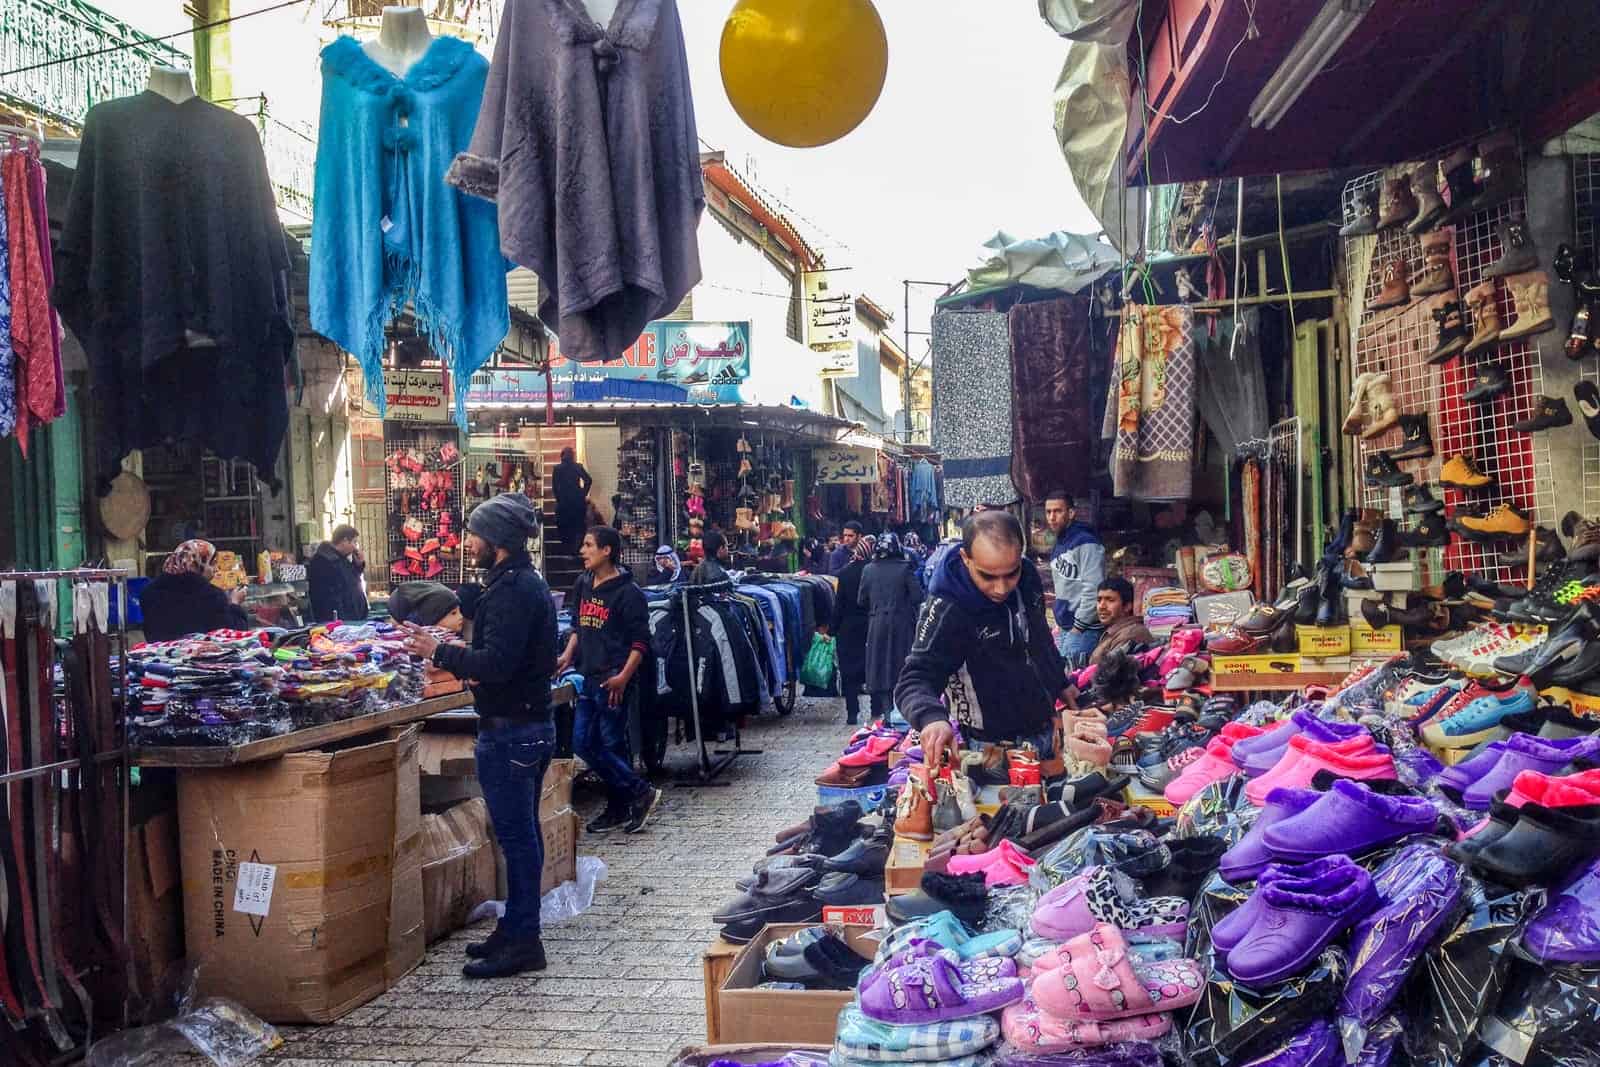 Market bazaar on Arab side of Hebron in the West Bank, Palestine